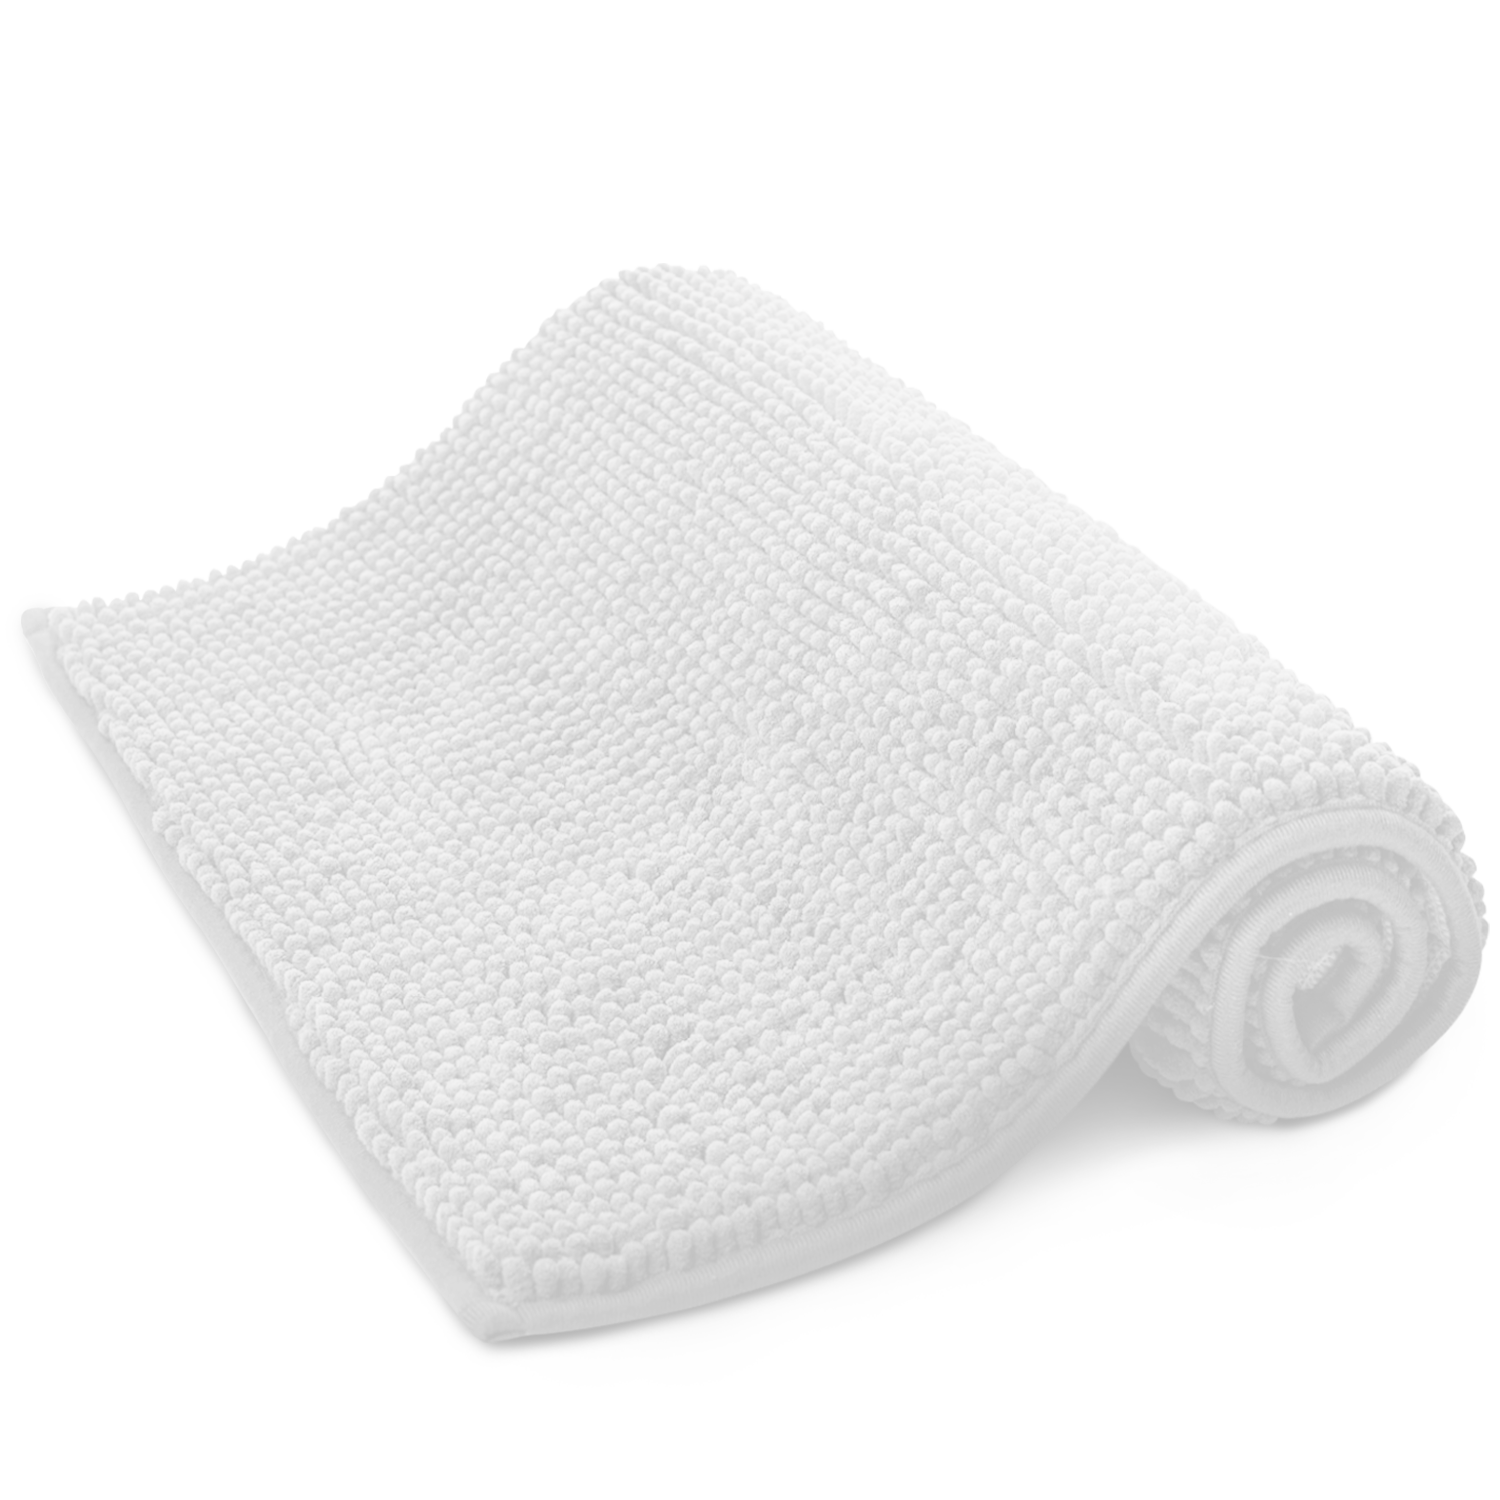 KEPLIN Non-Slip Microfiber Bath Mat - Hygienic & Quick-Drying